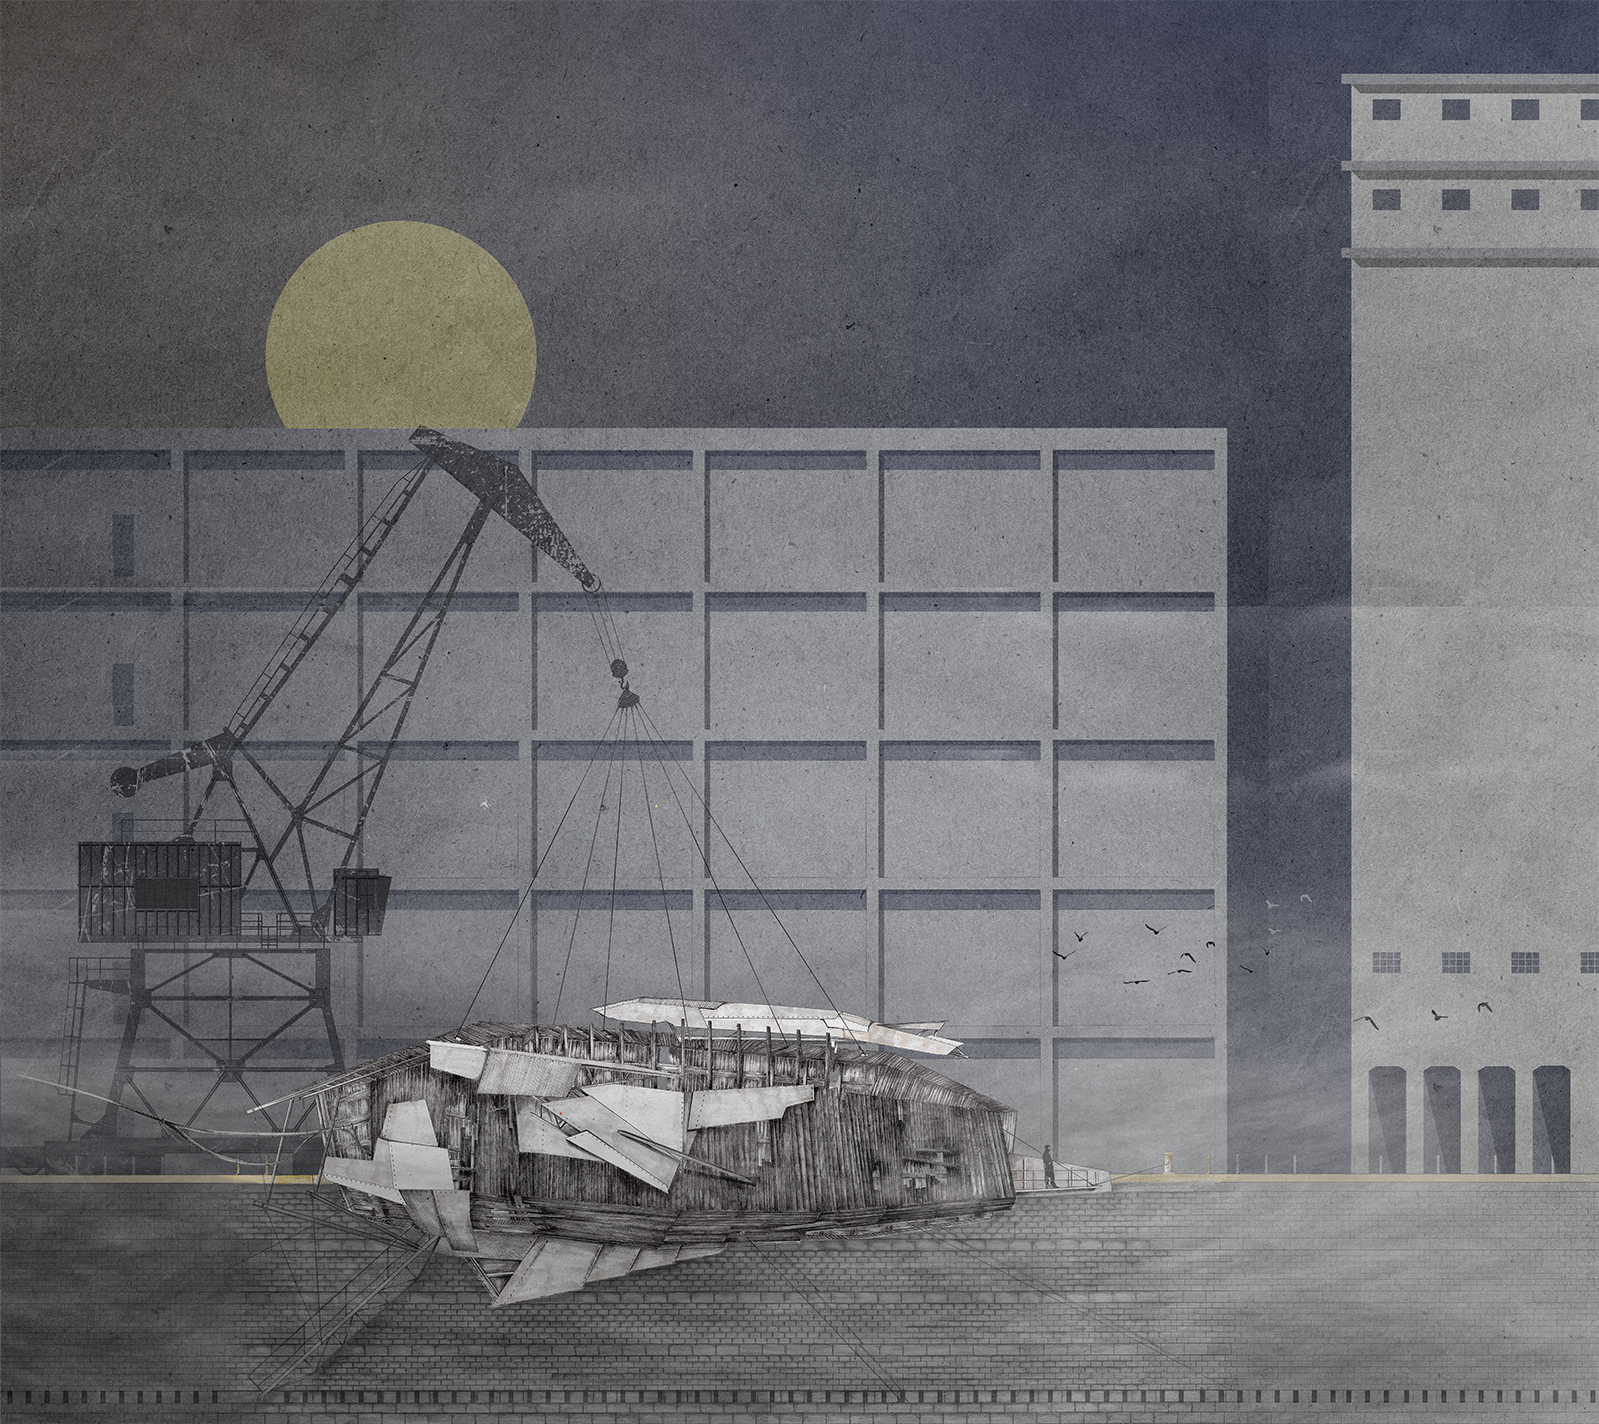 Archisearch Ετεροτοπίες της φθοράς: Ποιητικές κατασκευές στις λιμενικές εγκαταστάσεις του βιομηχανικού Πειραιά | Διπλωματική εργασία από τις Αθανασία Κοκκάλα και Μυρσίνη Μαυραπίδη